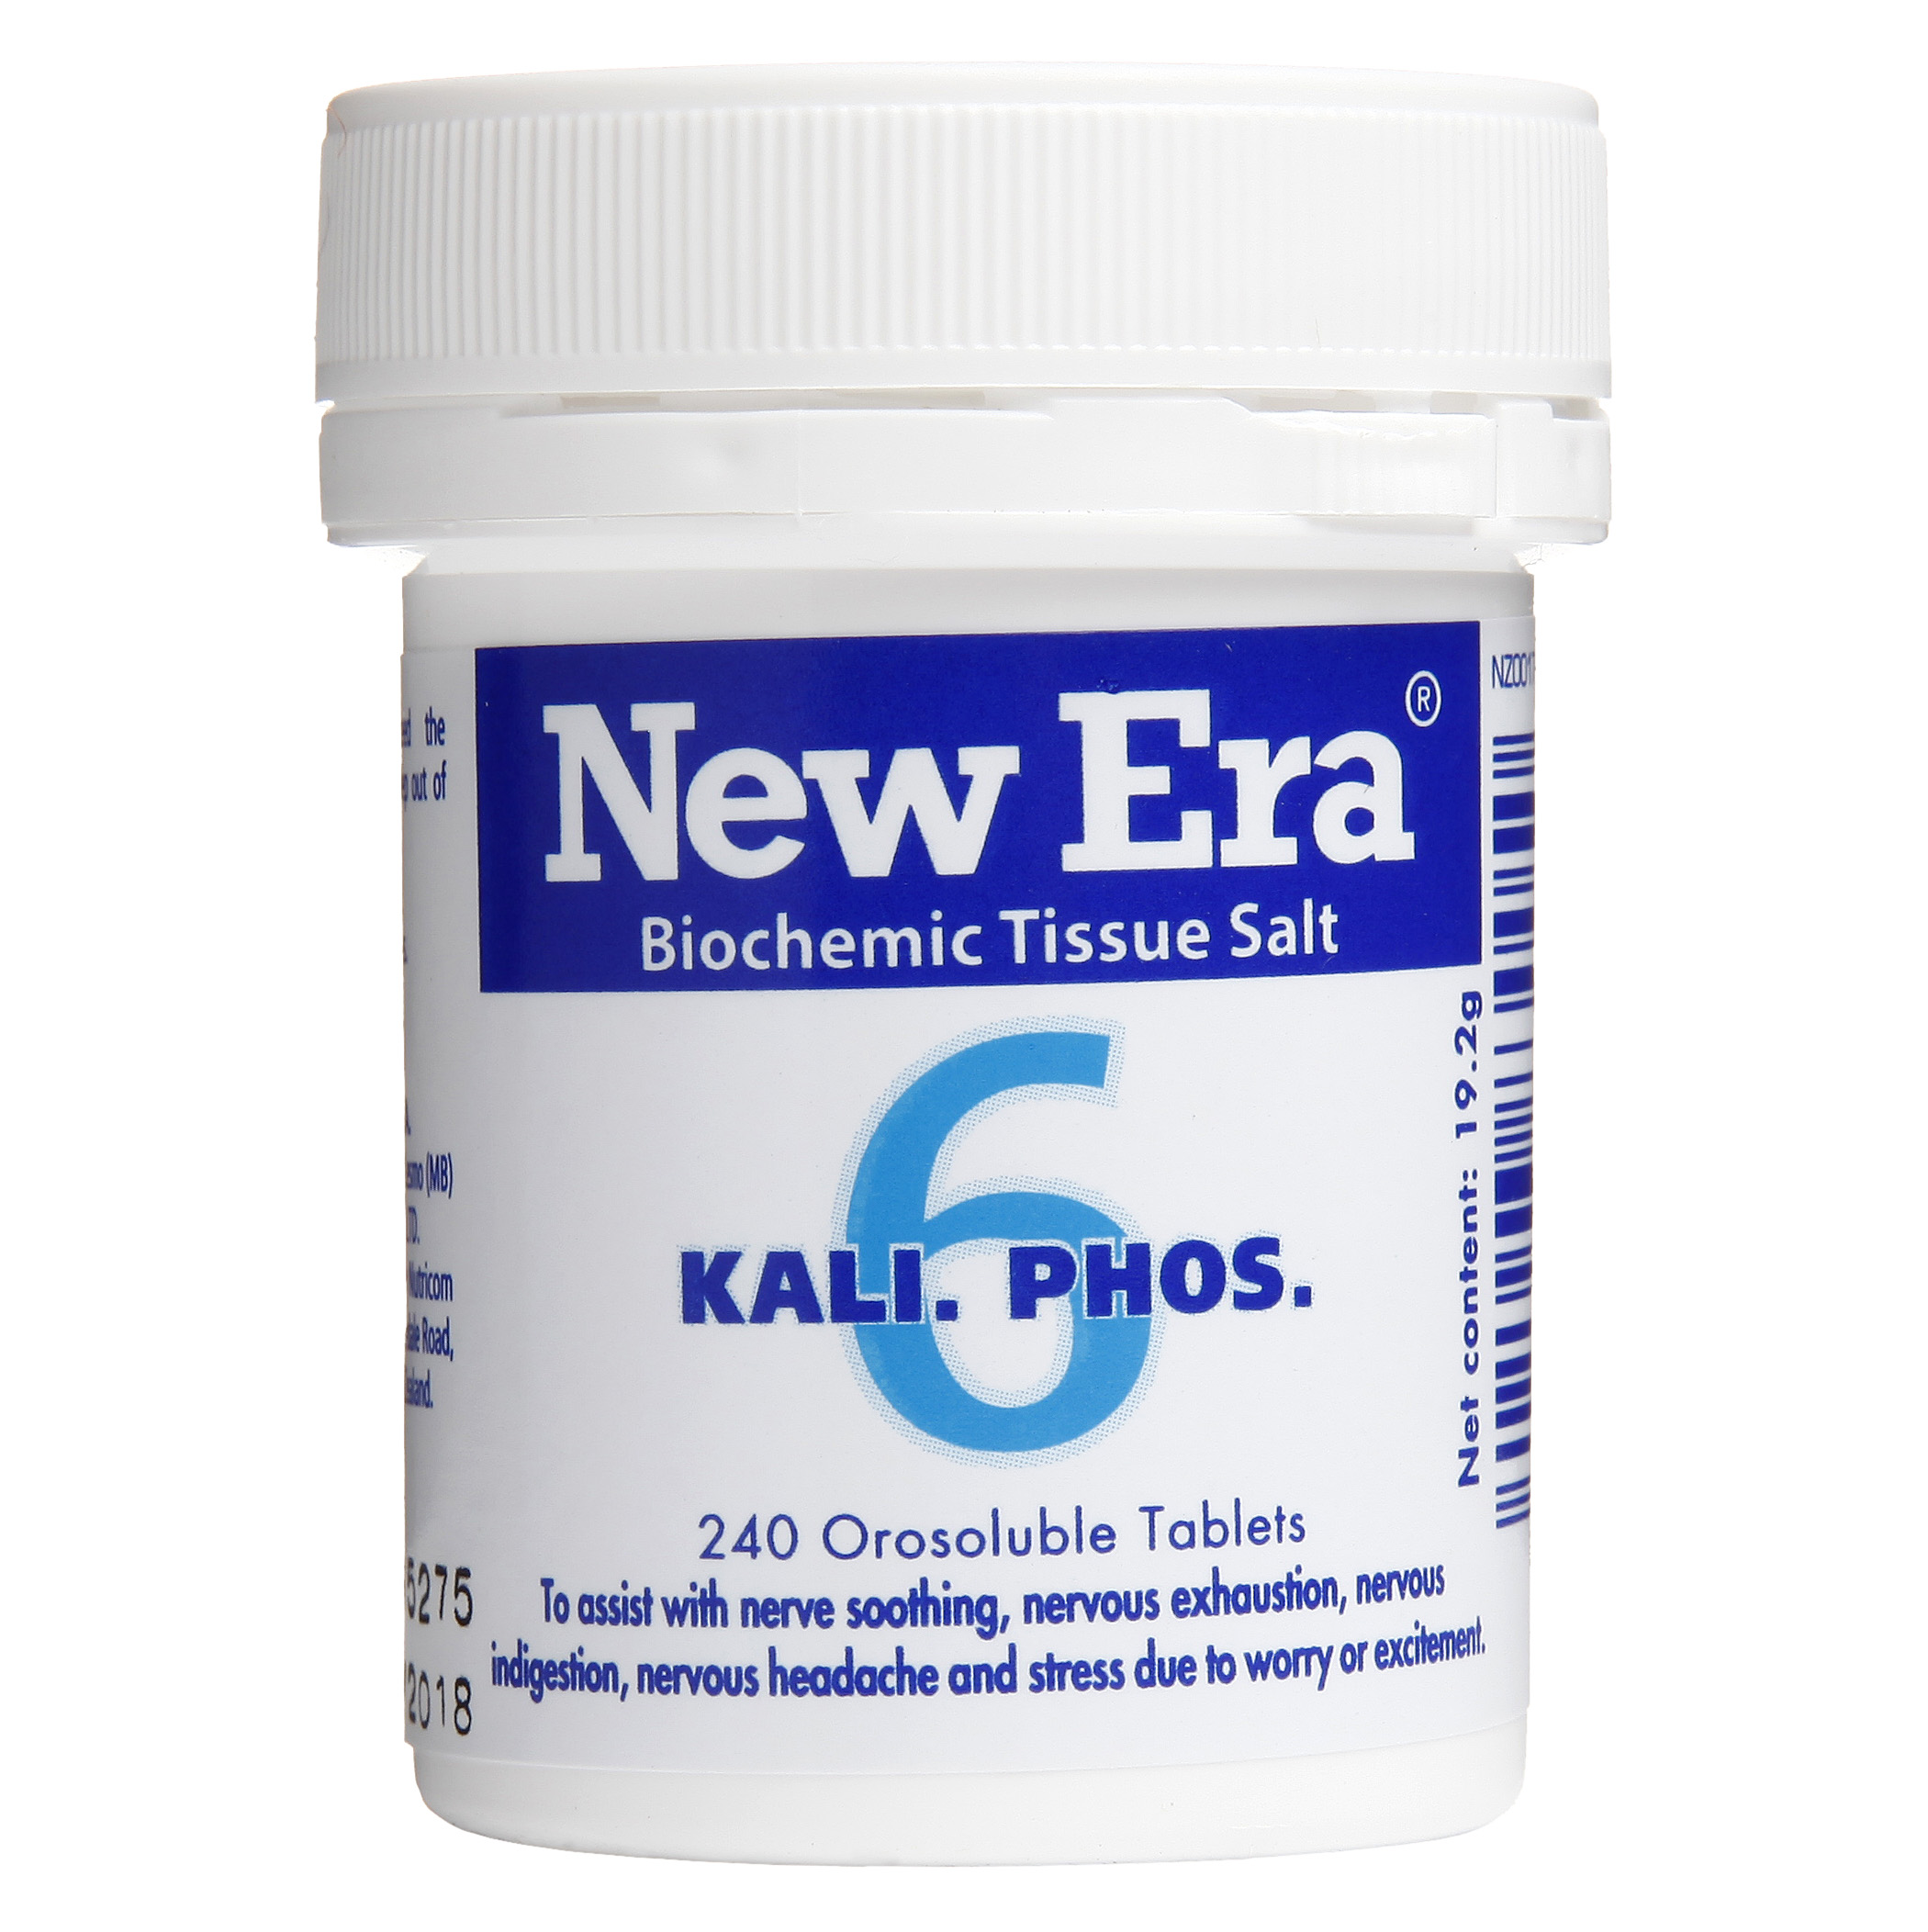 New Era Tissue Salt Kali. Phos. #06 - The Natural Tranquilliser